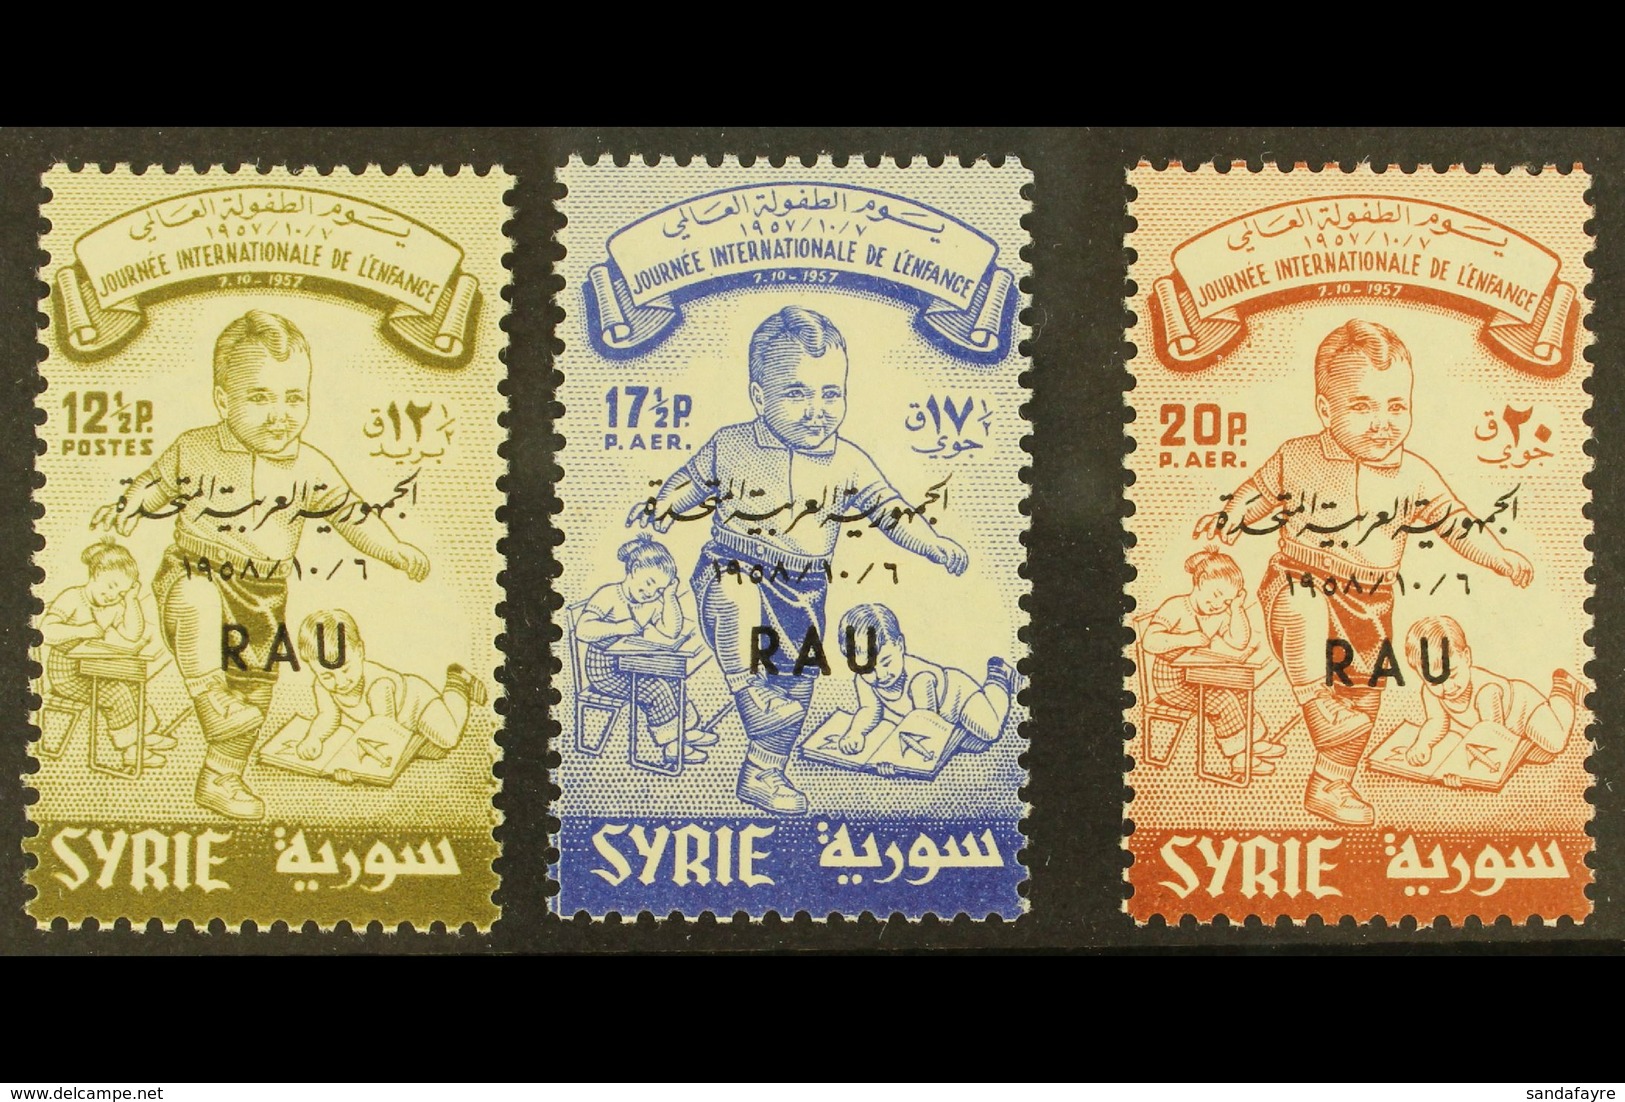 1958 International Children's Day "RAU" Overprints Complete Set, SG 670a/70c, Fine Never Hinged Mint, Fresh. (3 Stamps)  - Syrien